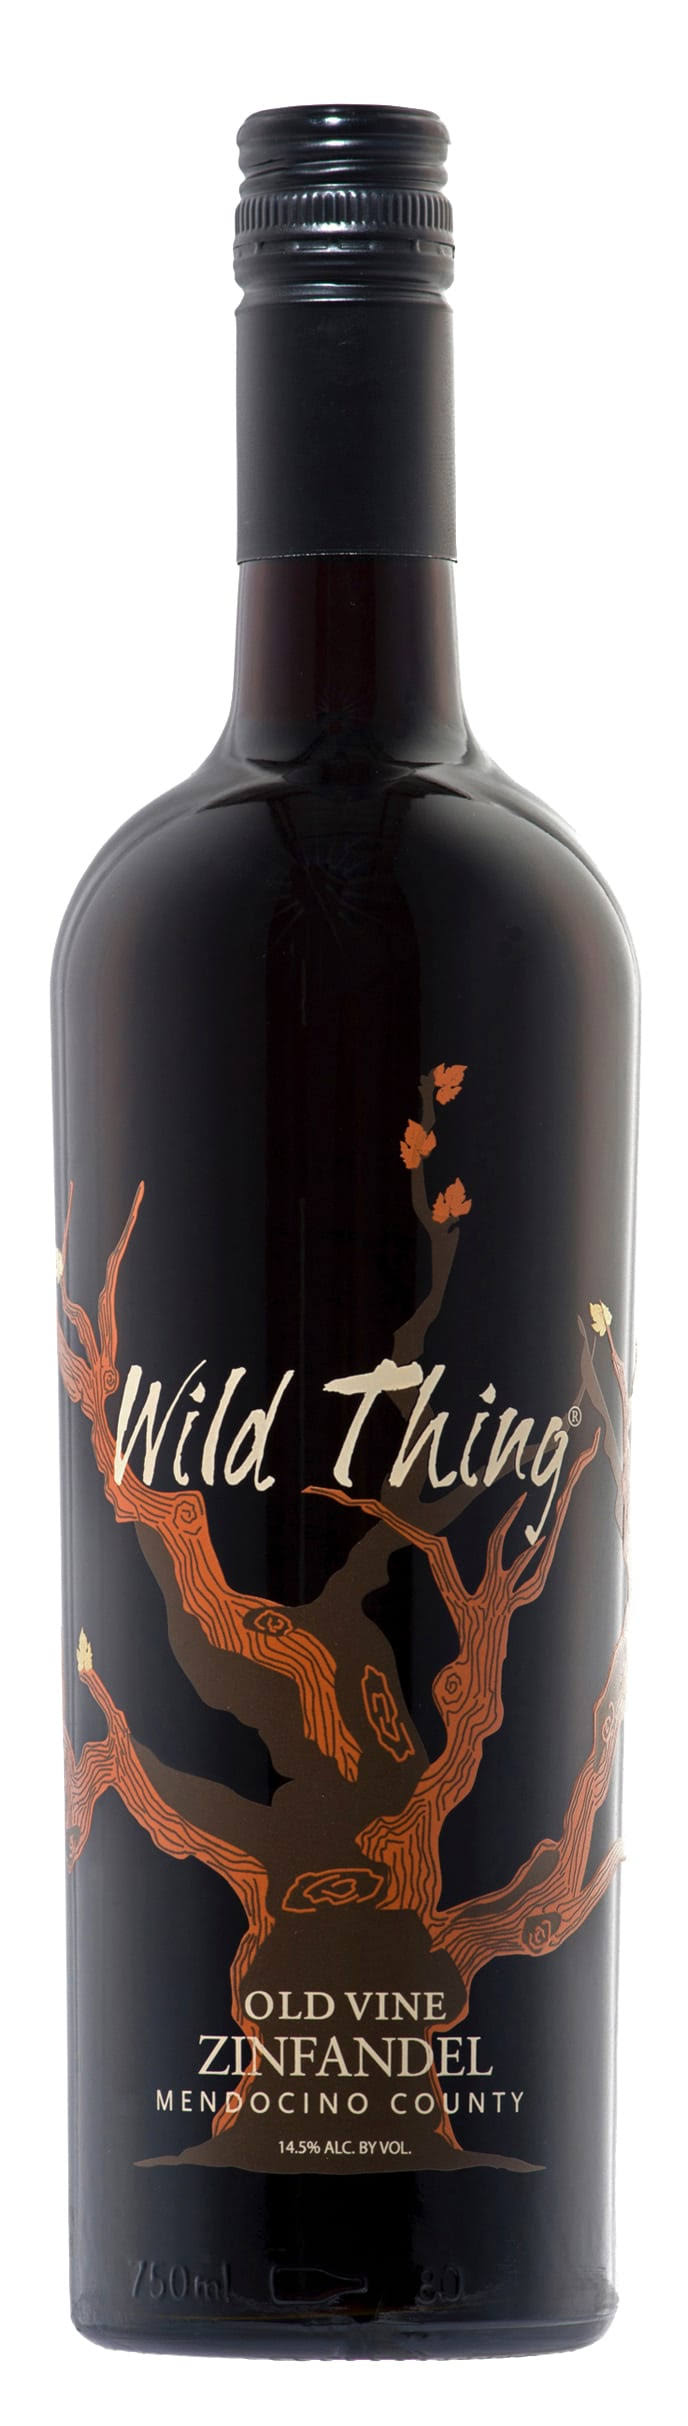 Wild Thing Zinfandel, Old Vine, Mendocino County, 2009 - 750 ml